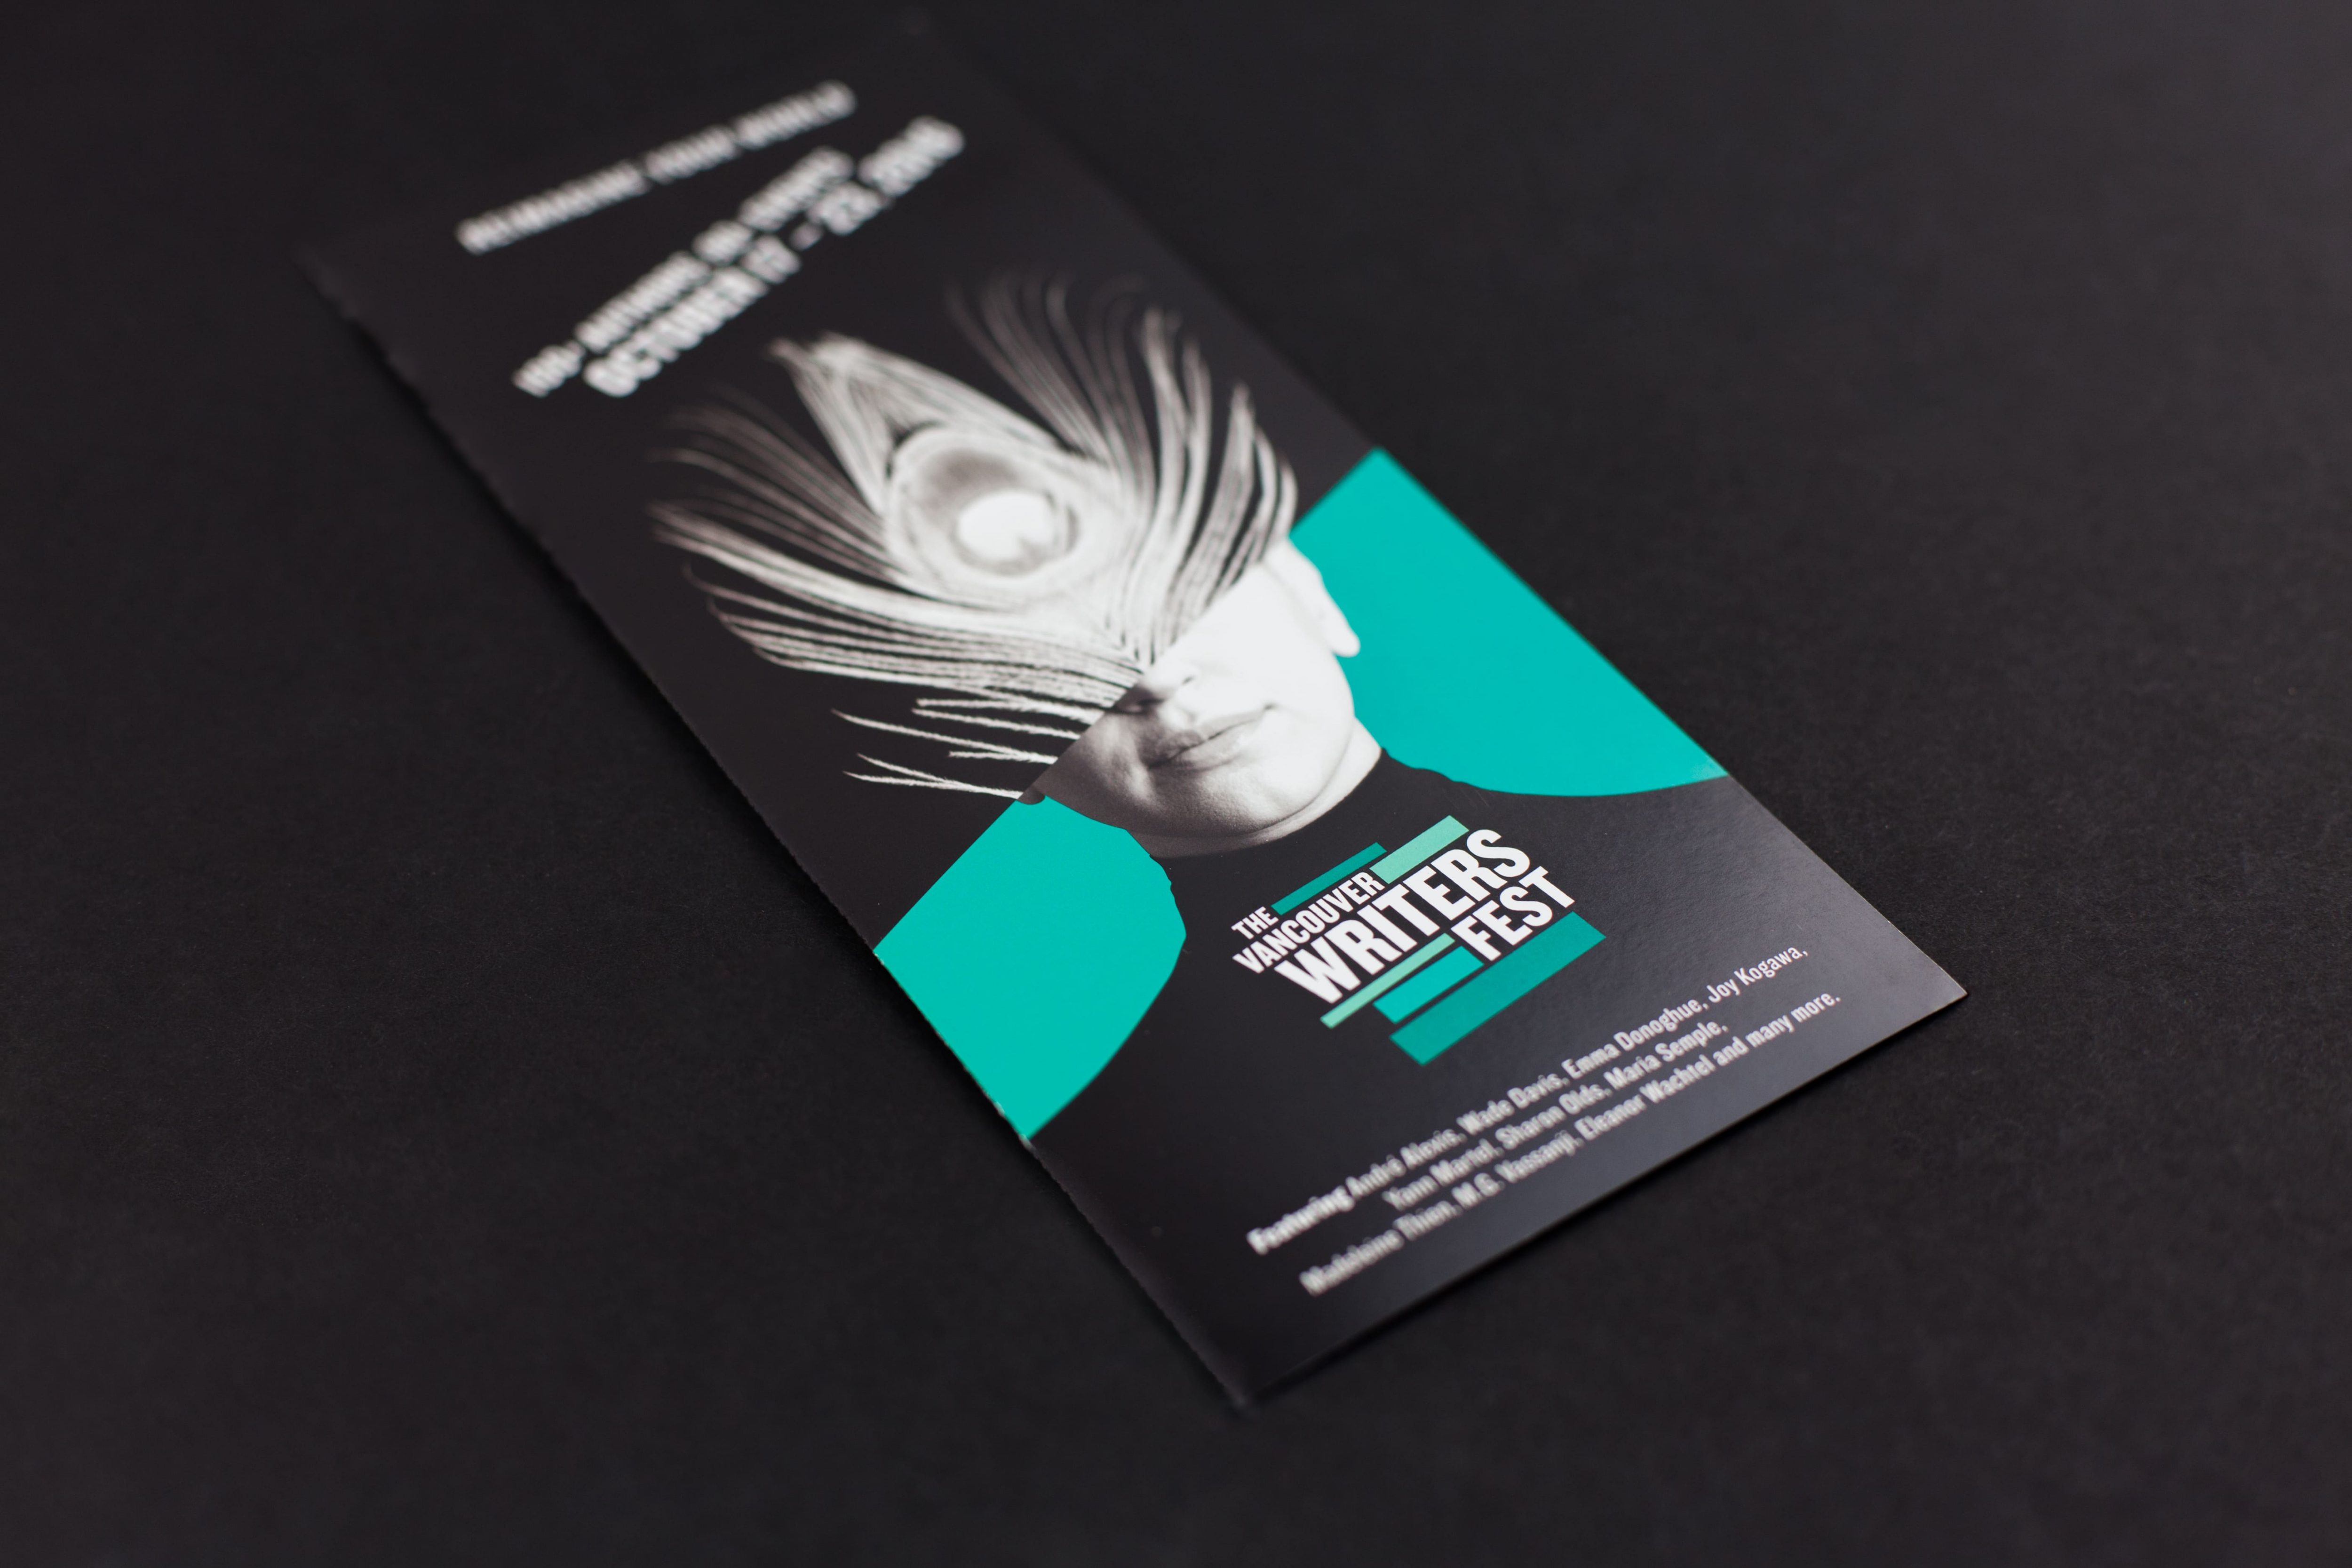 Vancouver Writers Fest's rebranded marketing brochure